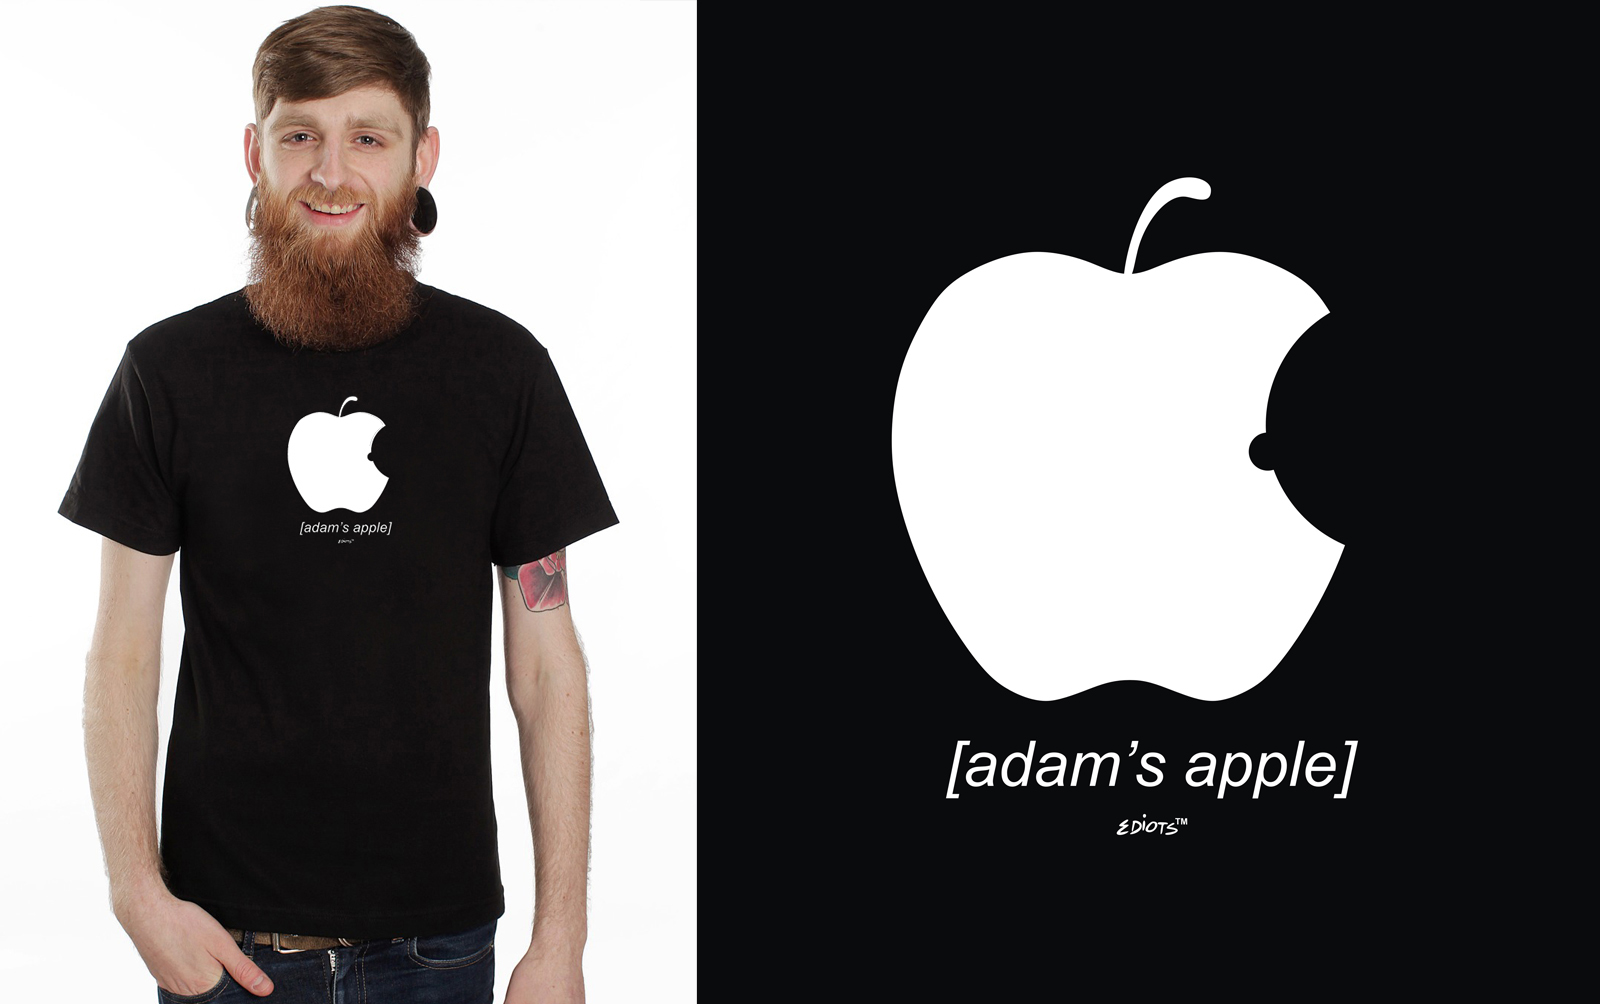 adams apple with EDiOTS model